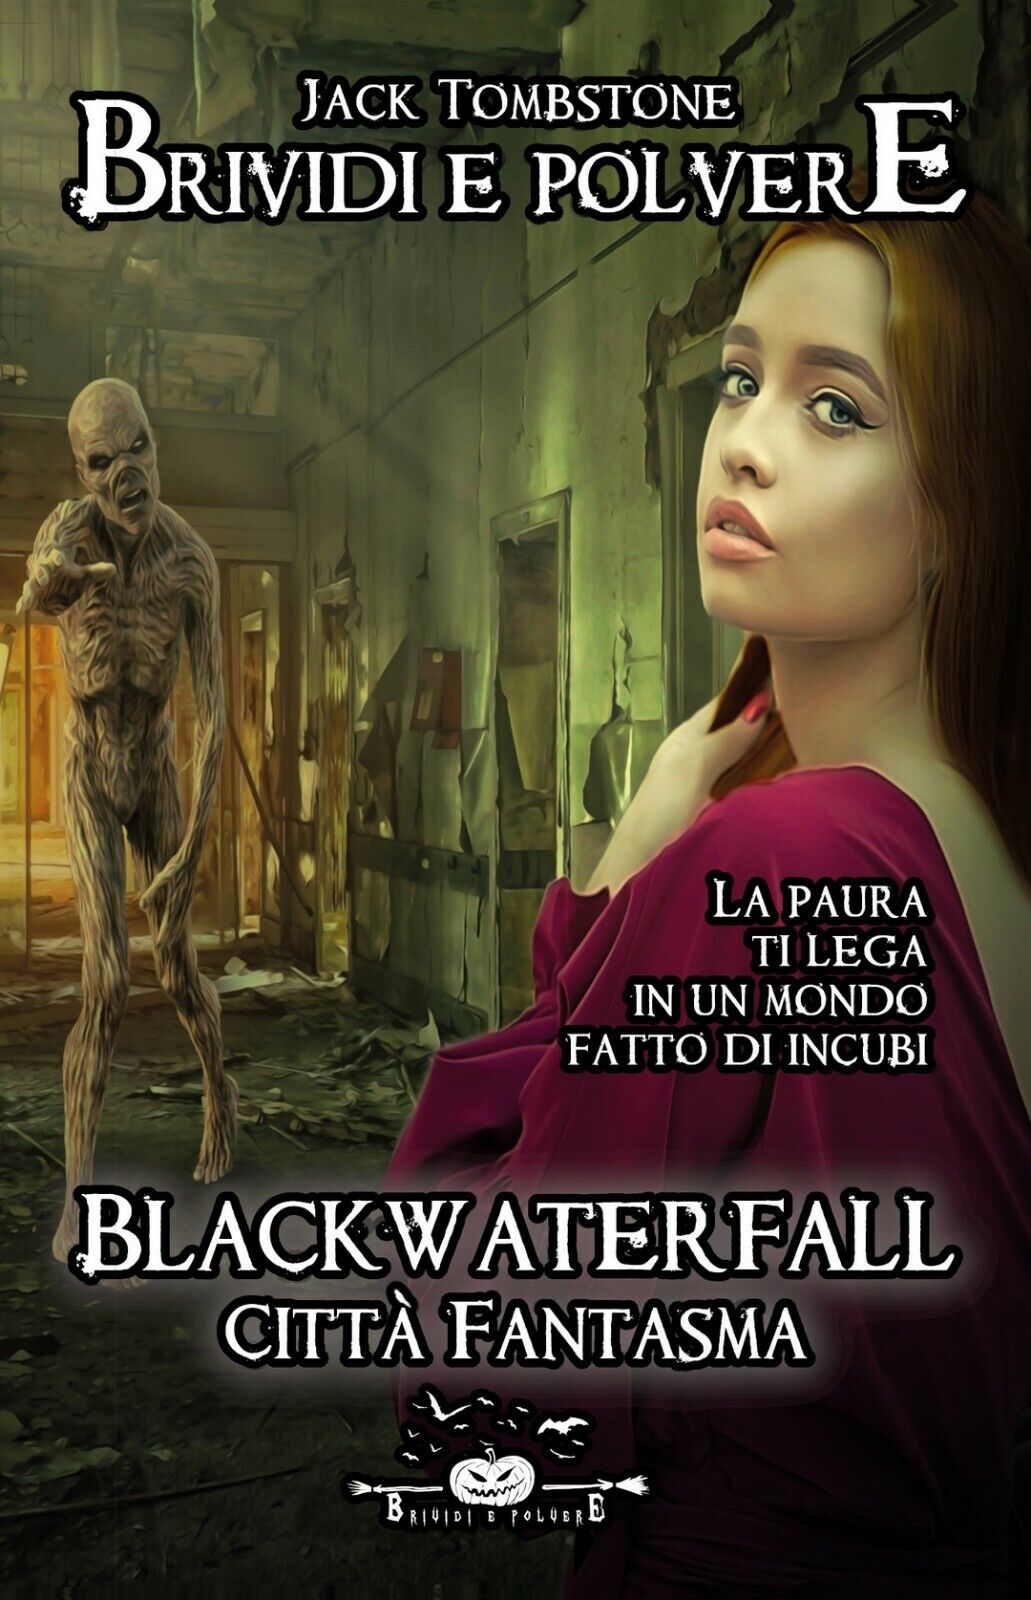 Blackwaterfall - Citt? Fantasma (Brividi e Polvere 1)  di Jack Tombstone,  2020